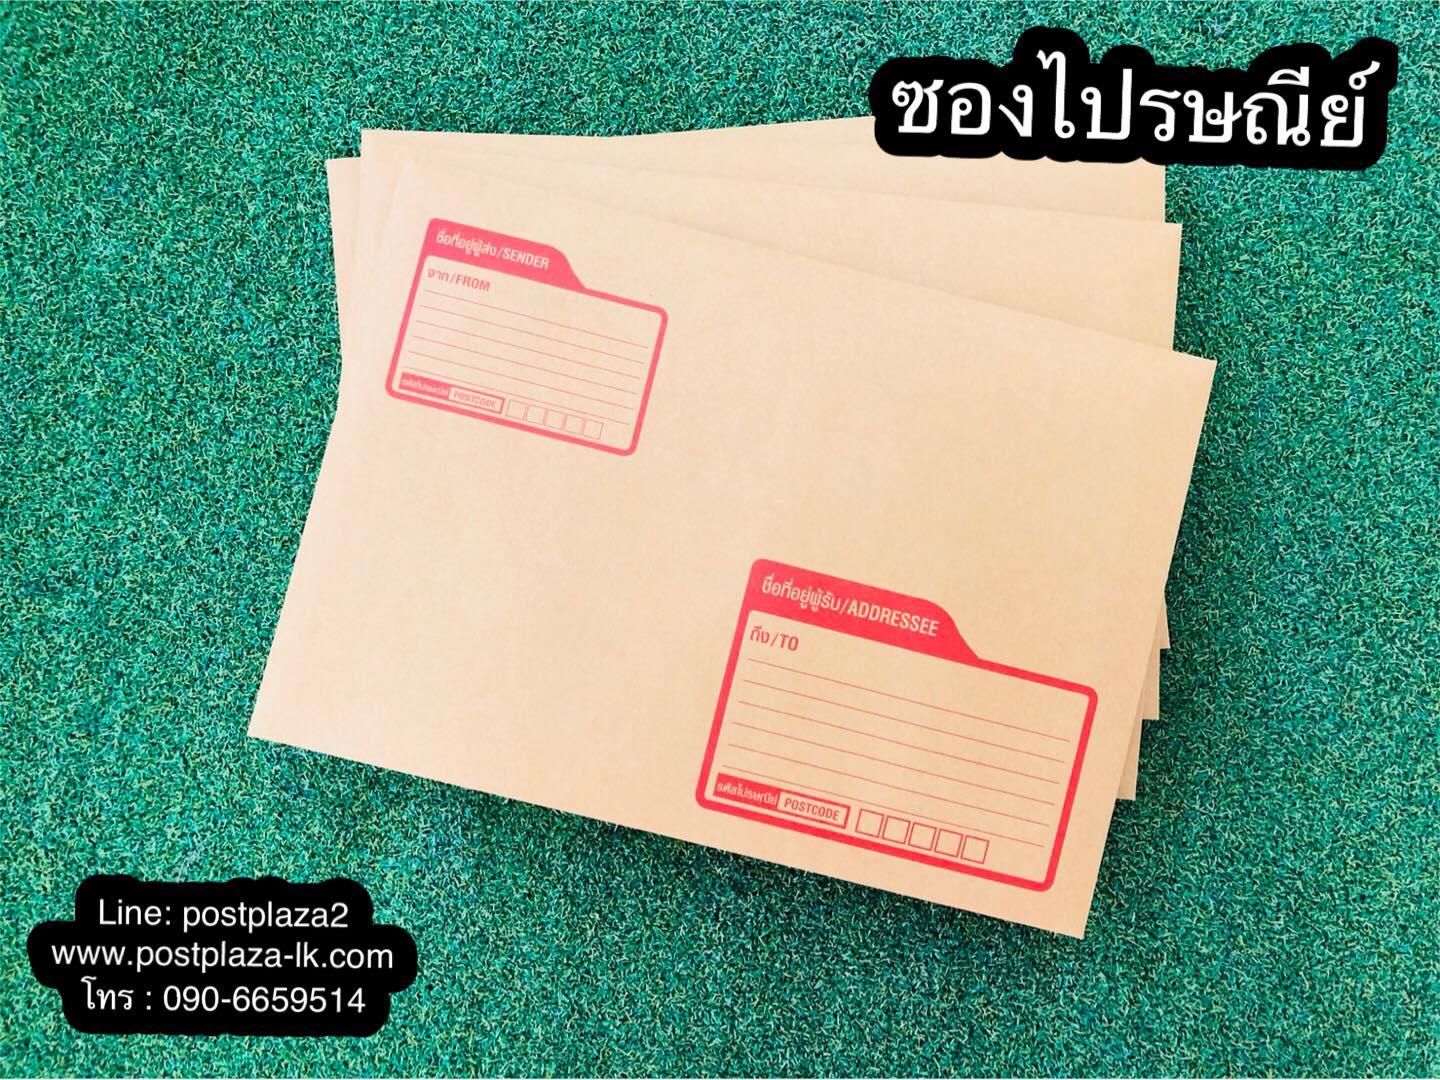 Postplaza ซองจดหมาย ซองไปรษณีย์สีน้ำตาลขนาด 6x9 นิ้ว (50 ใบ)